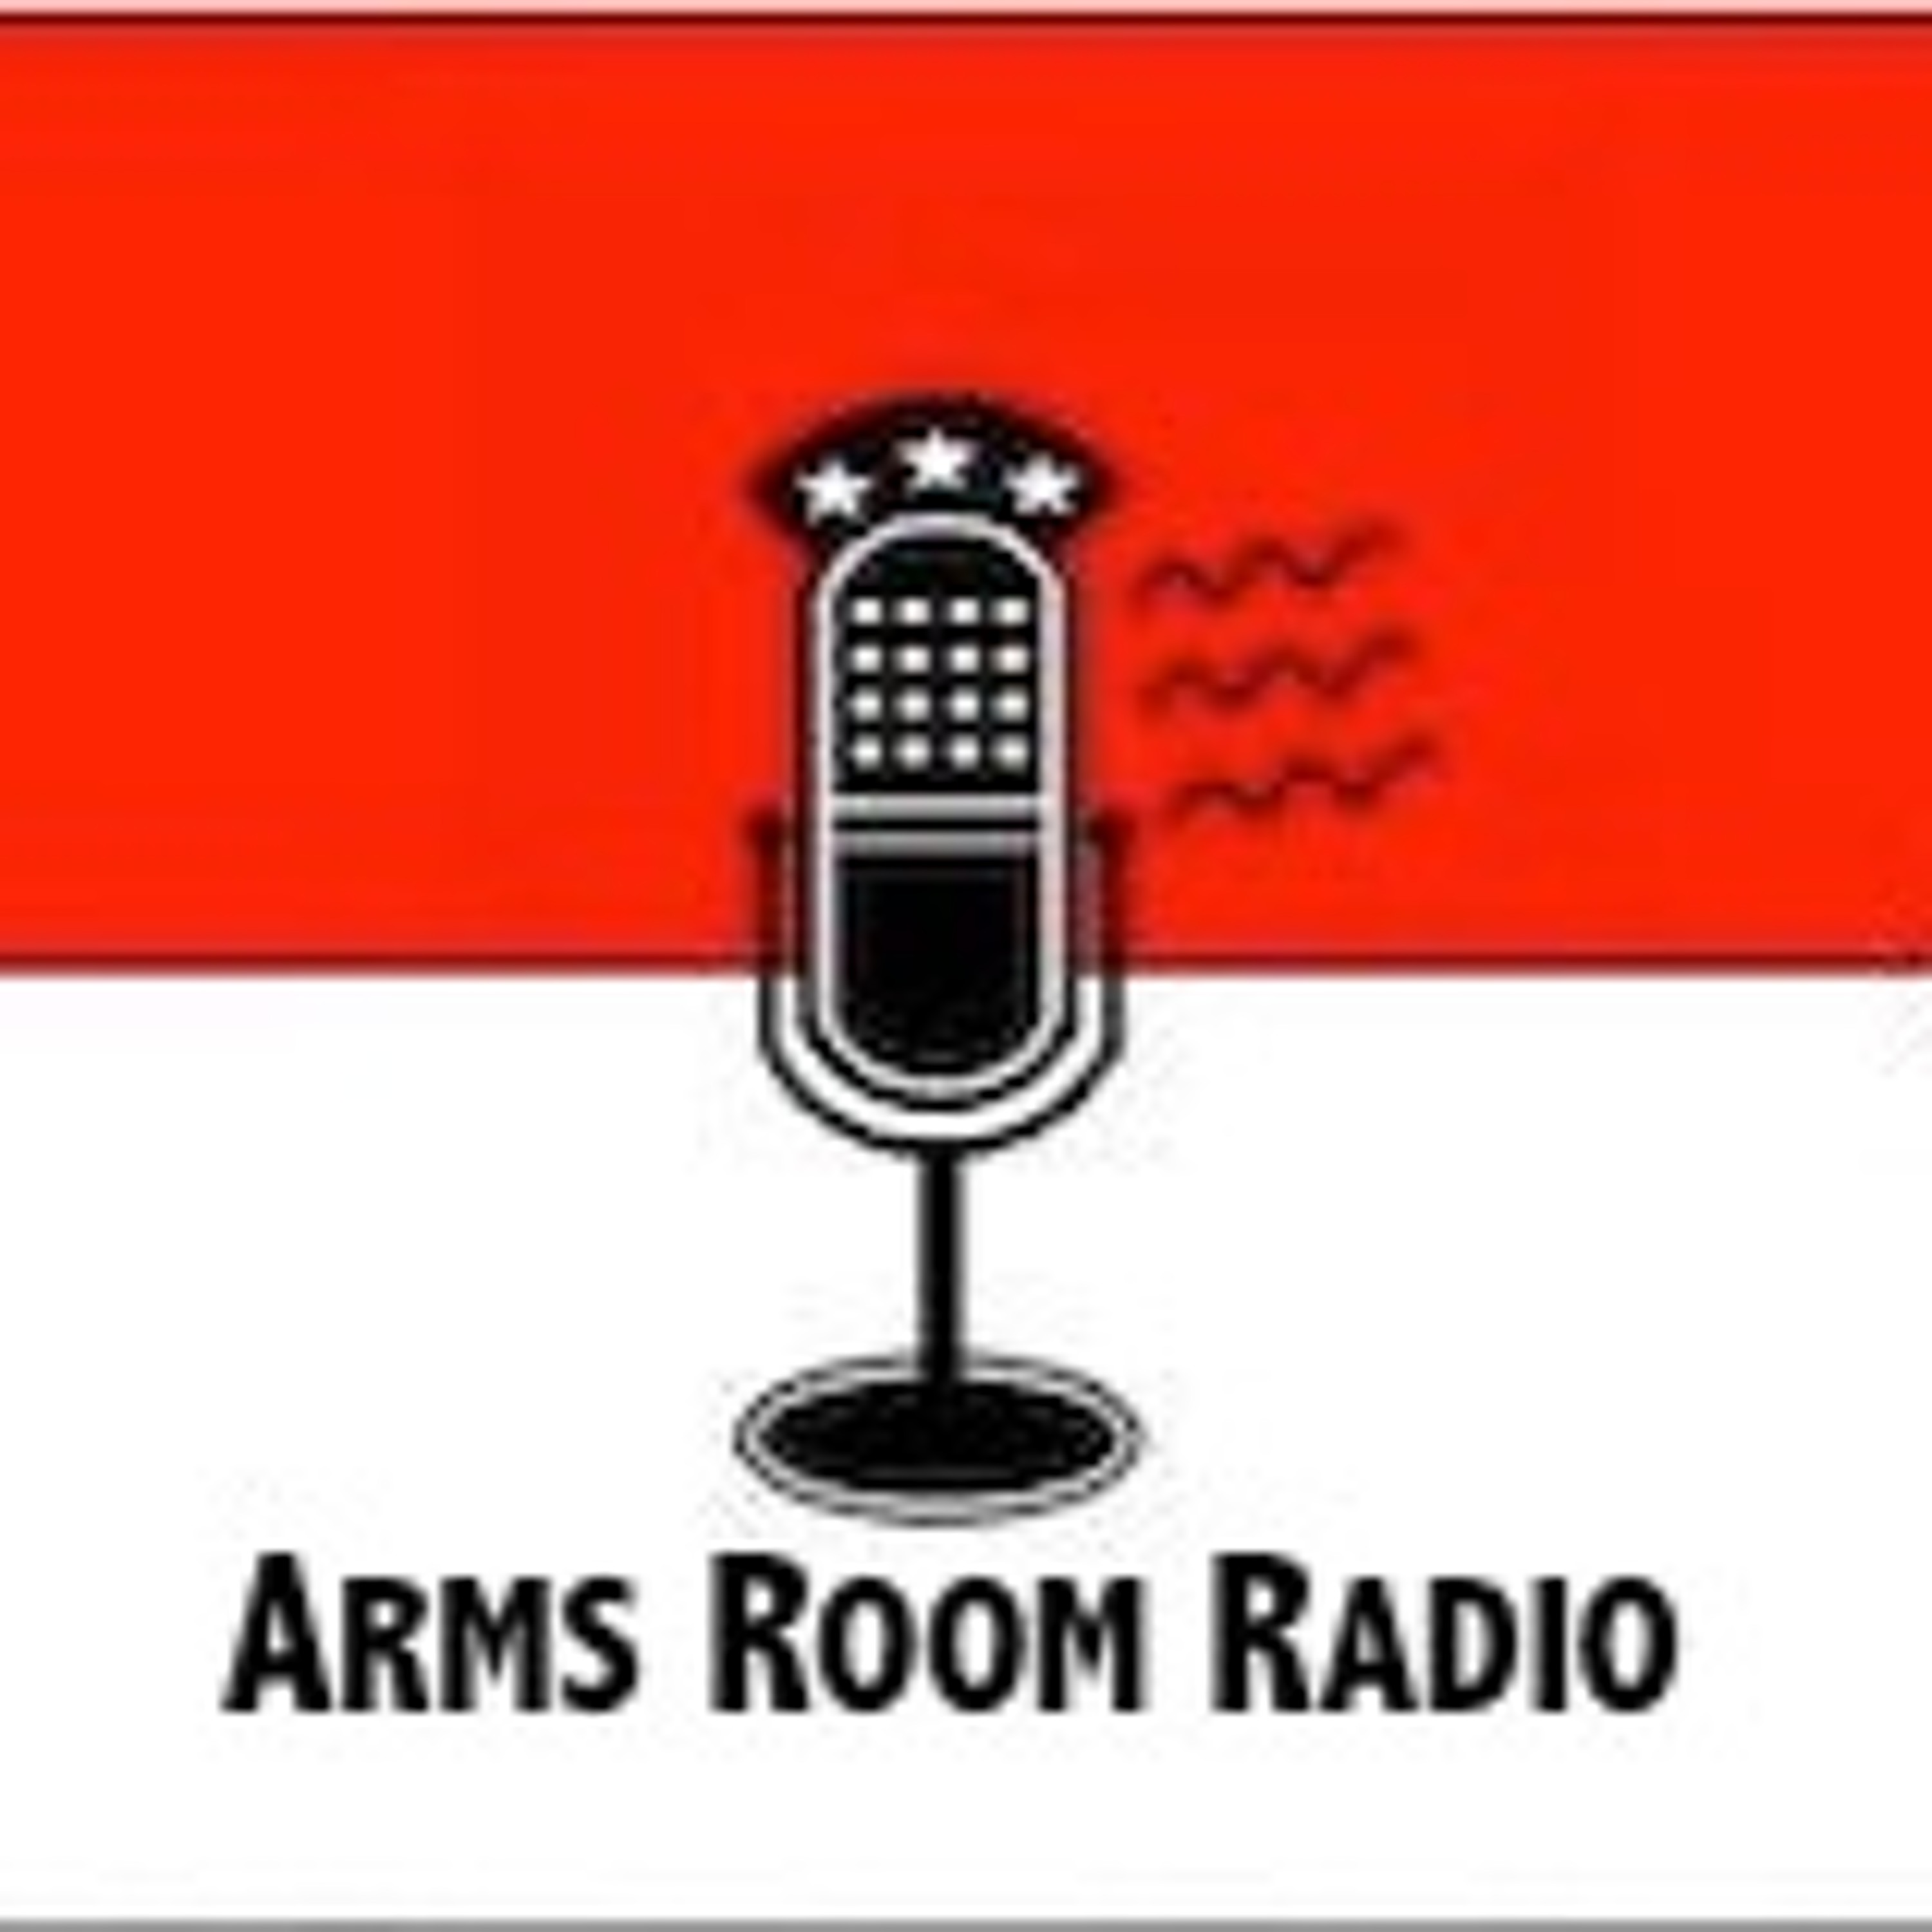 ArmsRoomRadio 12.12.20 Earl and Major Bill Host, Todd Fossey Calls in